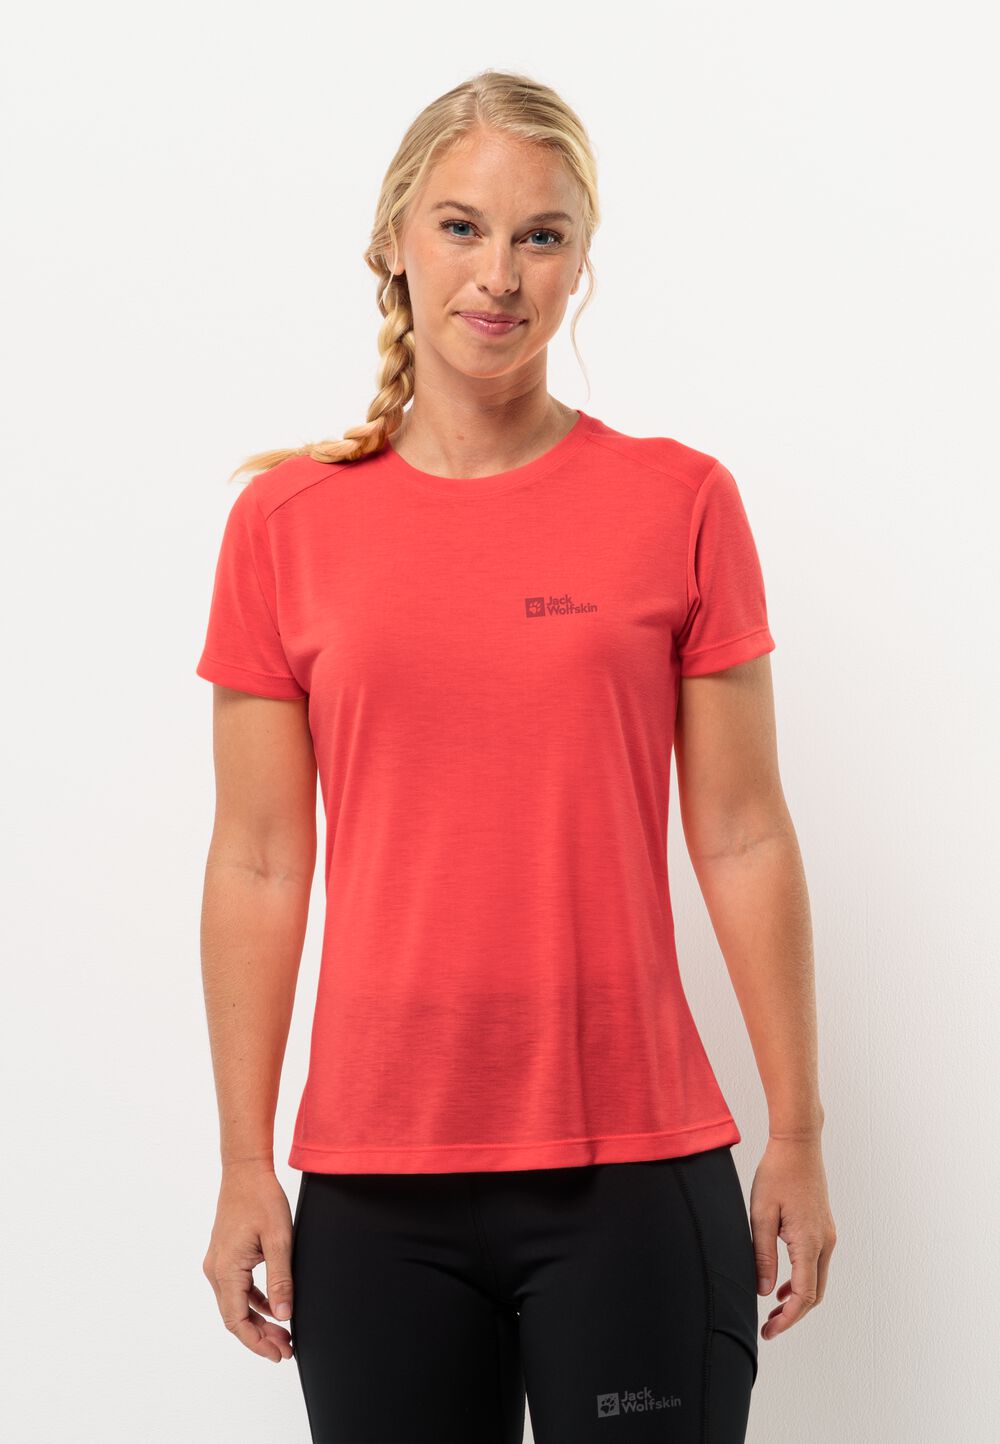 Jack Wolfskin Vonnan S S T-Shirt Women Functioneel shirt Dames XS rood vibrant red